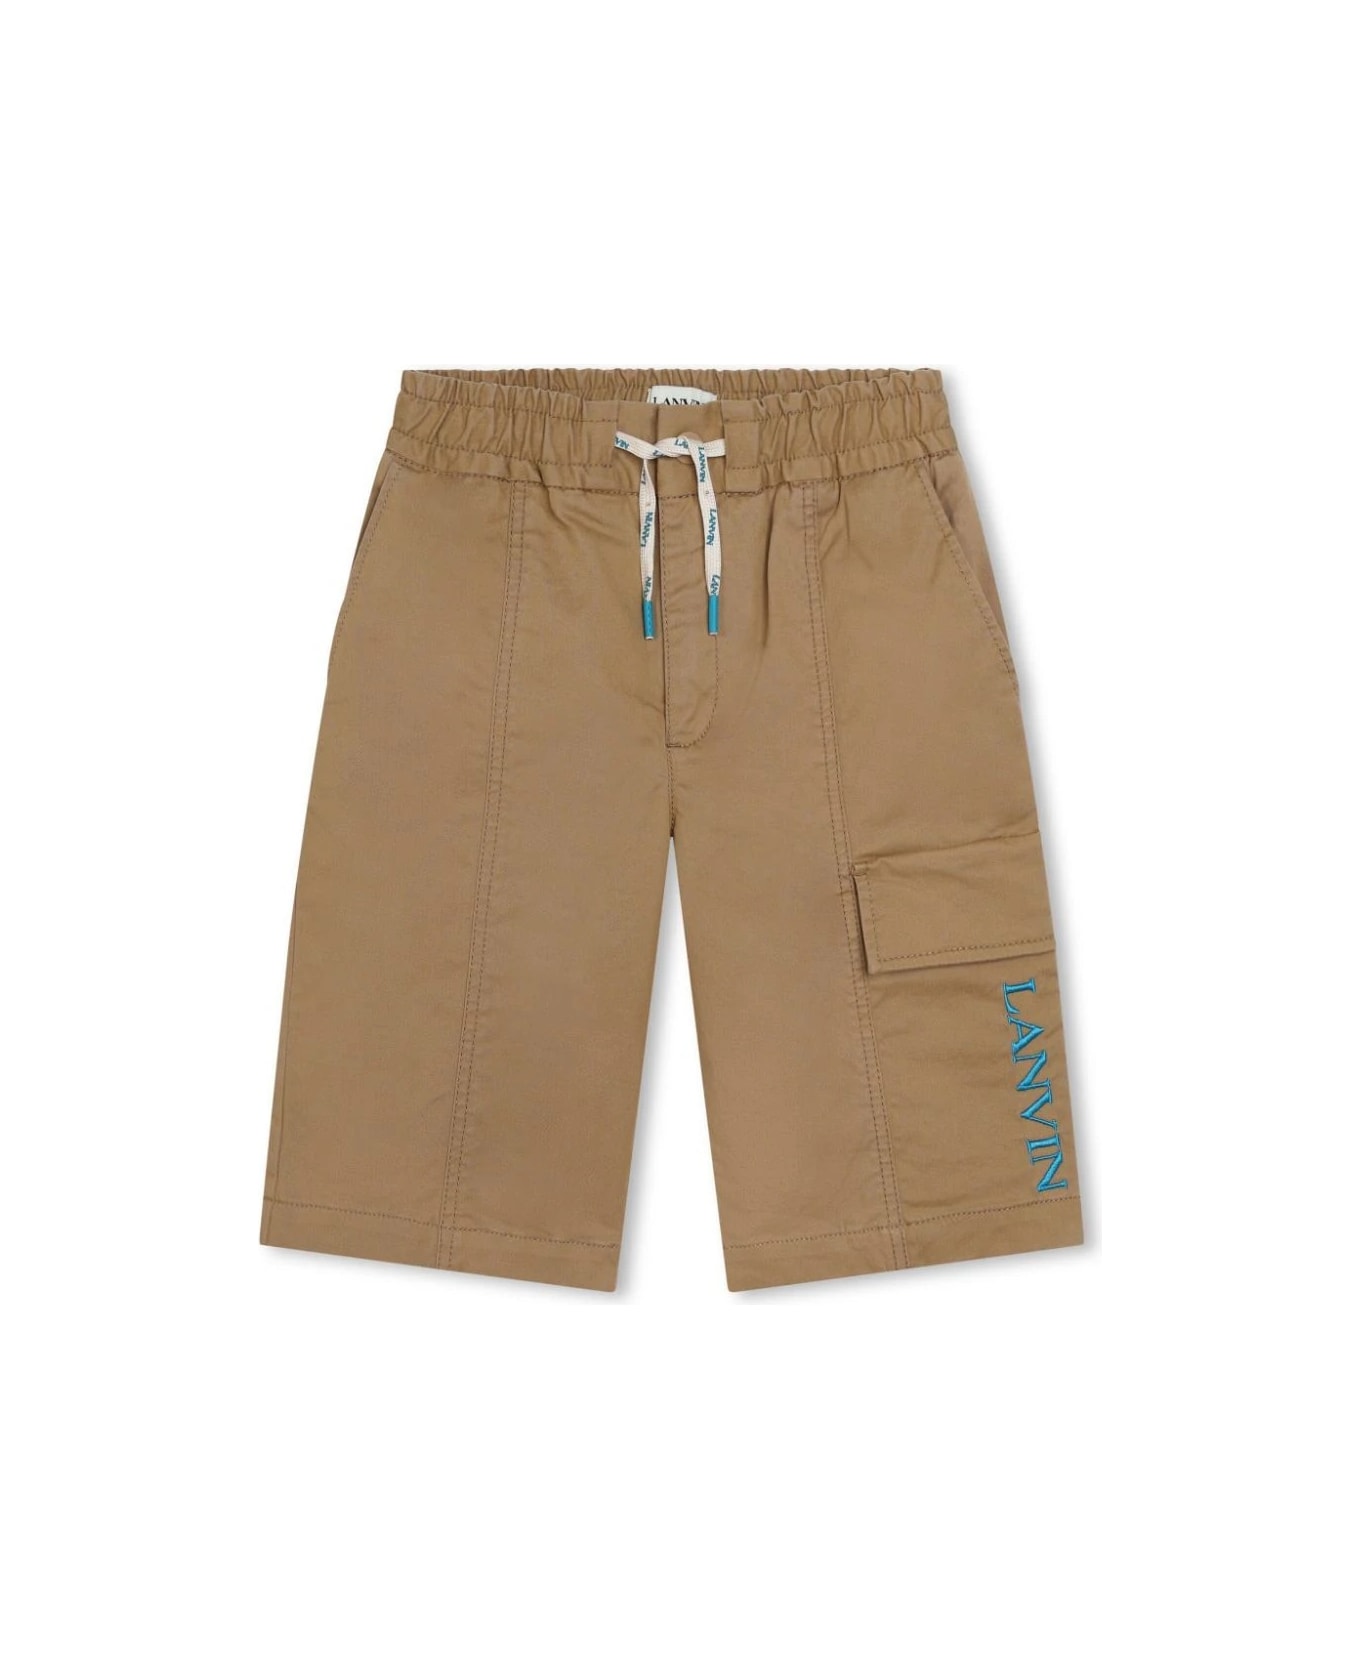 Lanvin Dark Beige Bermuda Shorts With Logo And "curb" Motif - Brown ボトムス